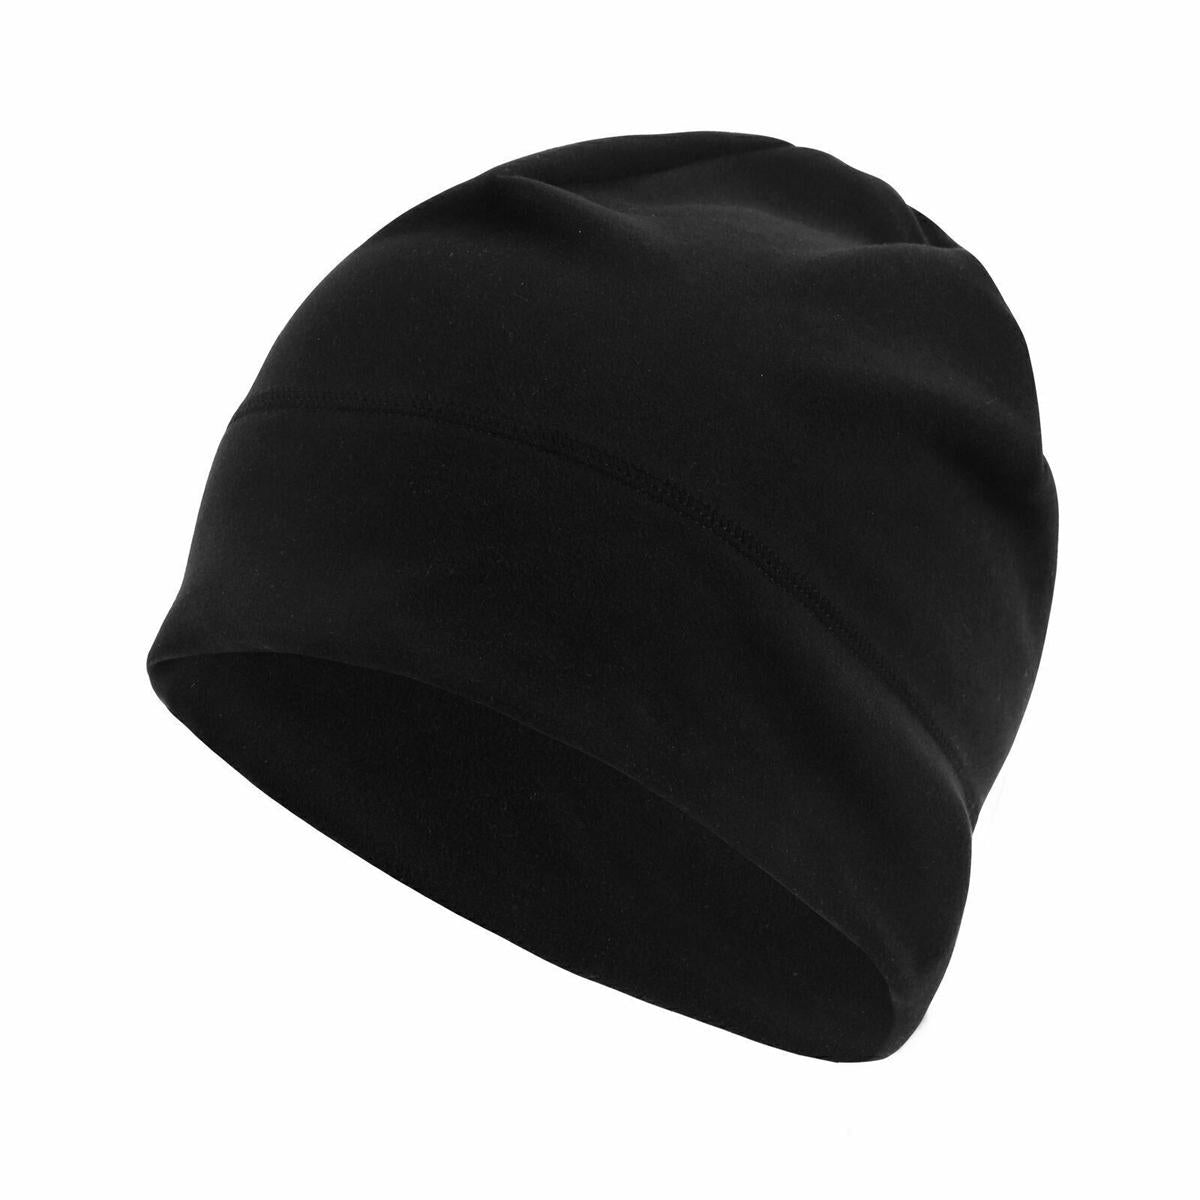 Skull Cap For Winter Ski Warm Fleece Windproof Beanie Hat